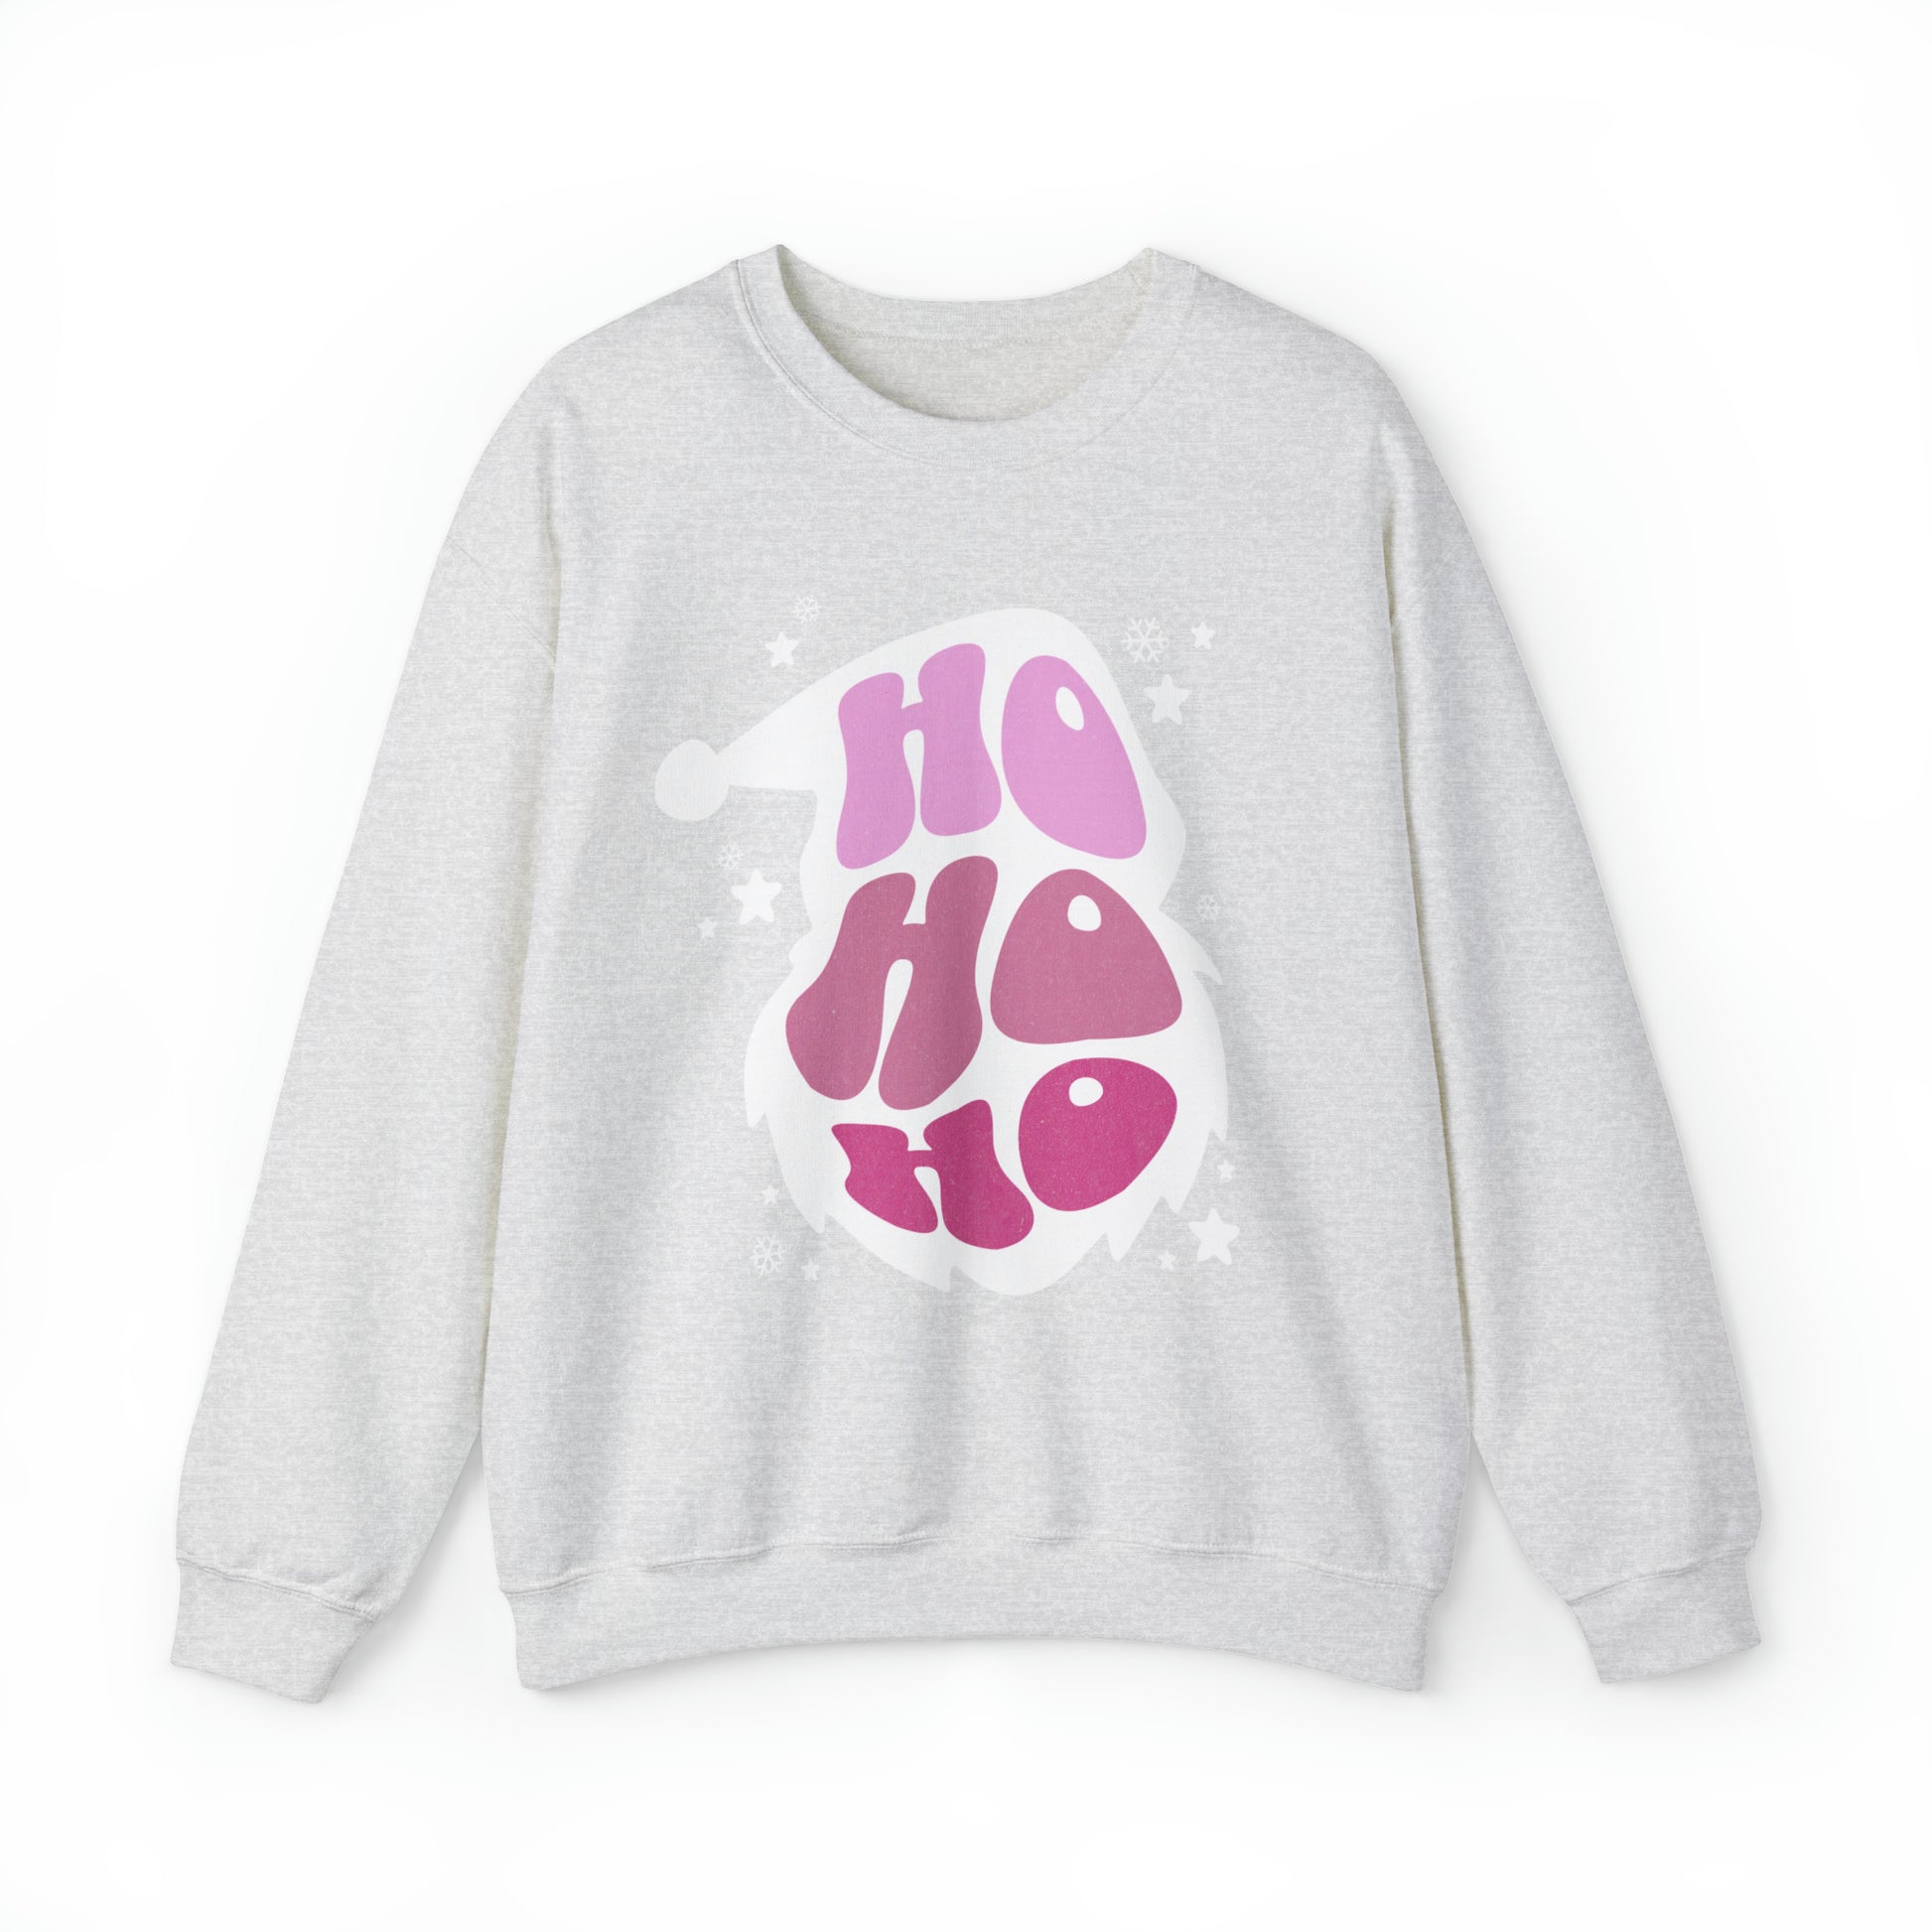 A stylish Printify sweatshirt, the Ho Ho Ho Santa Outline Pink Holiday Sweatshirt - Cozy Crewneck - Festive Christmas Sweate, offering both comfort and style.